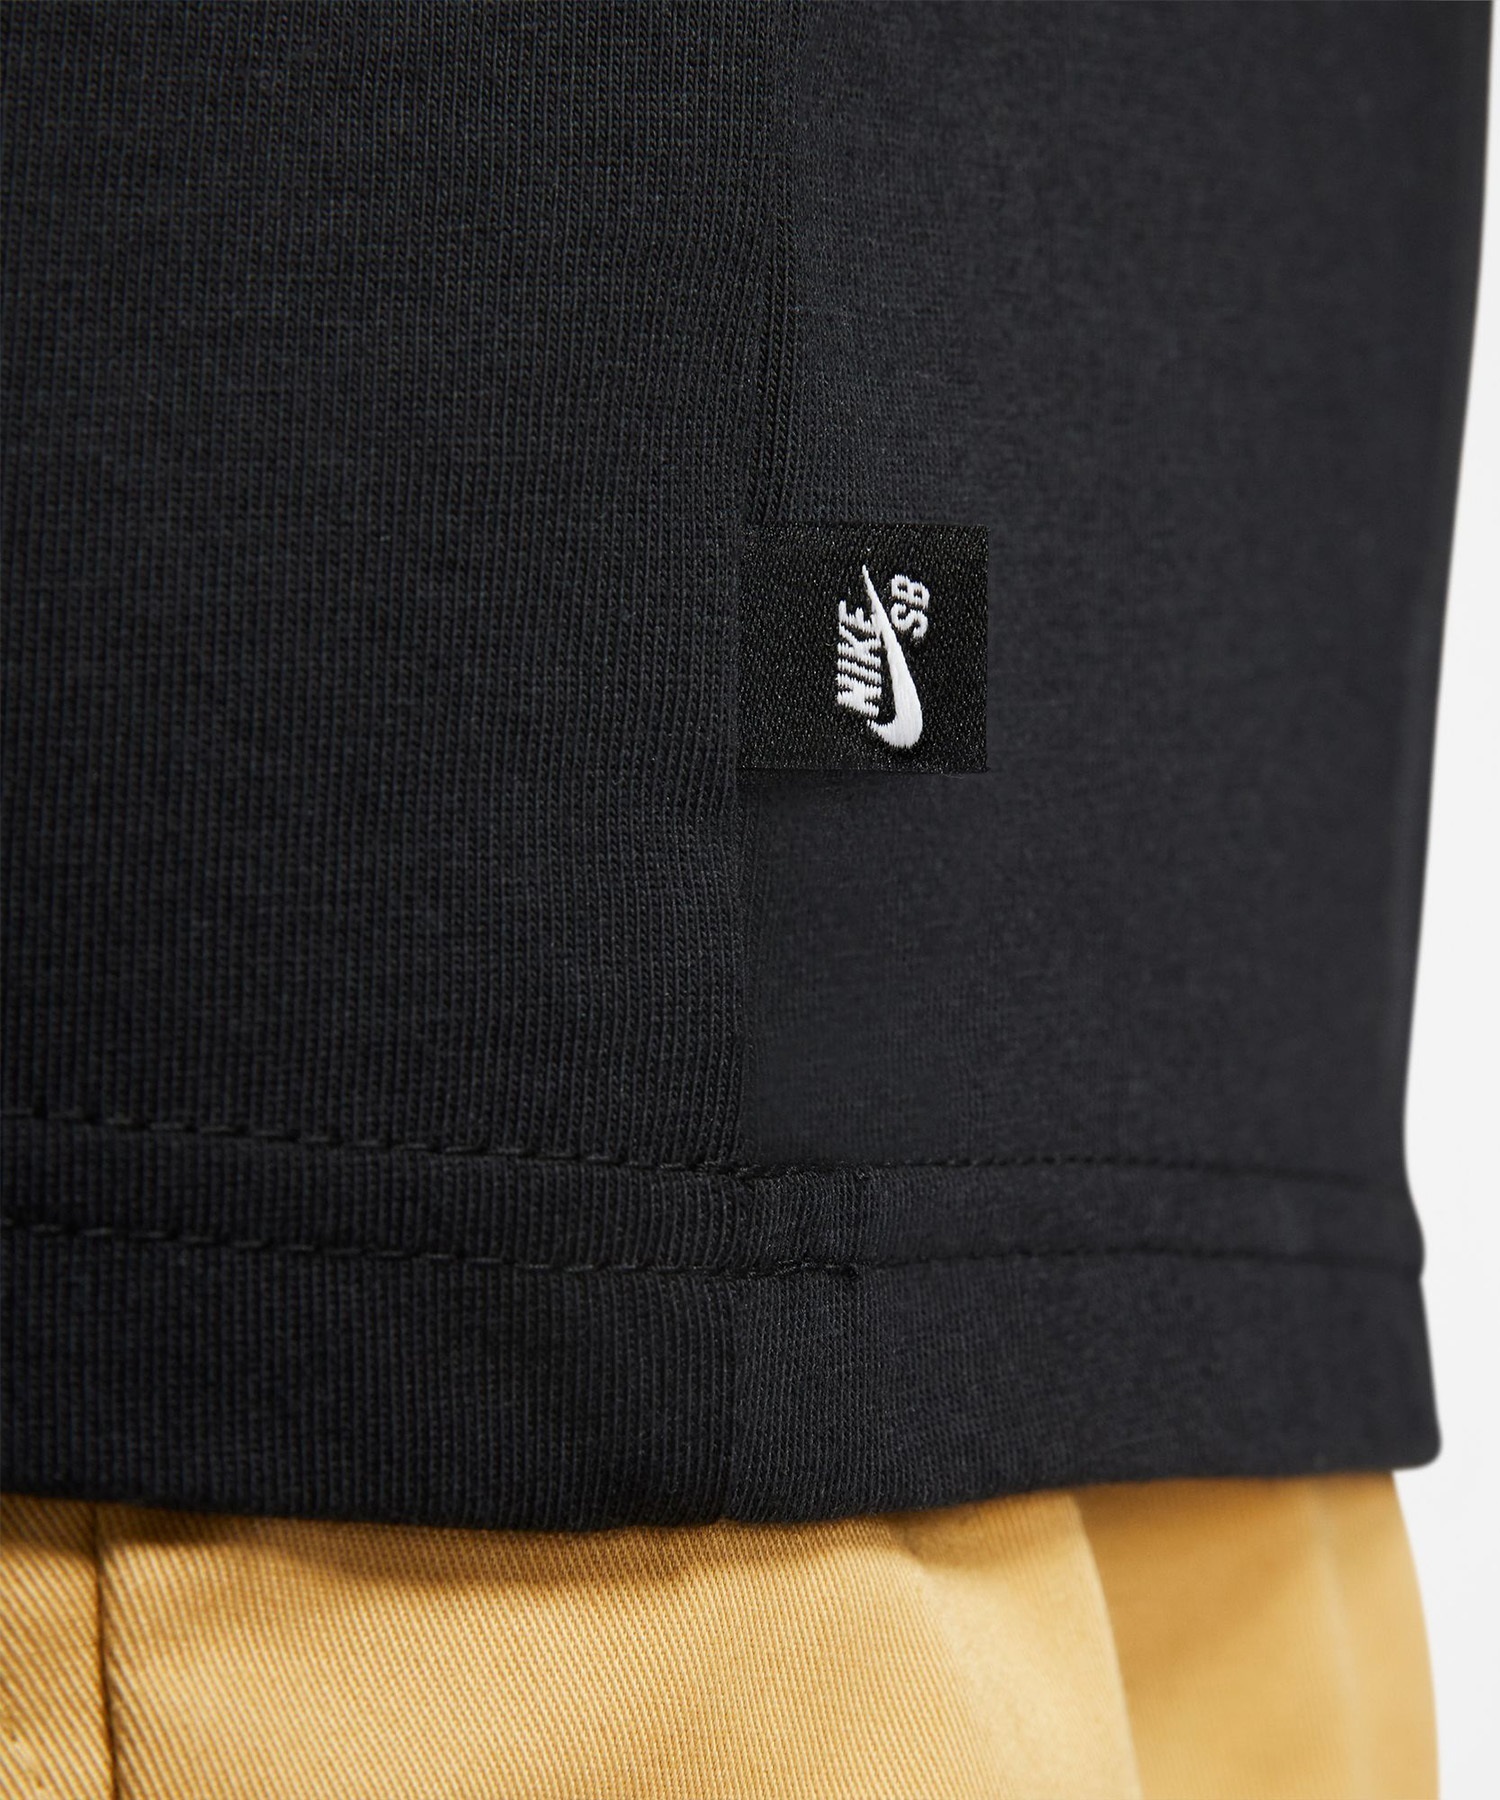 NIKE SB/ナイキエスビー ロゴ スケートボード メンズ 半袖 Tシャツ ブラック/ホワイト CV7540-010(010-M)